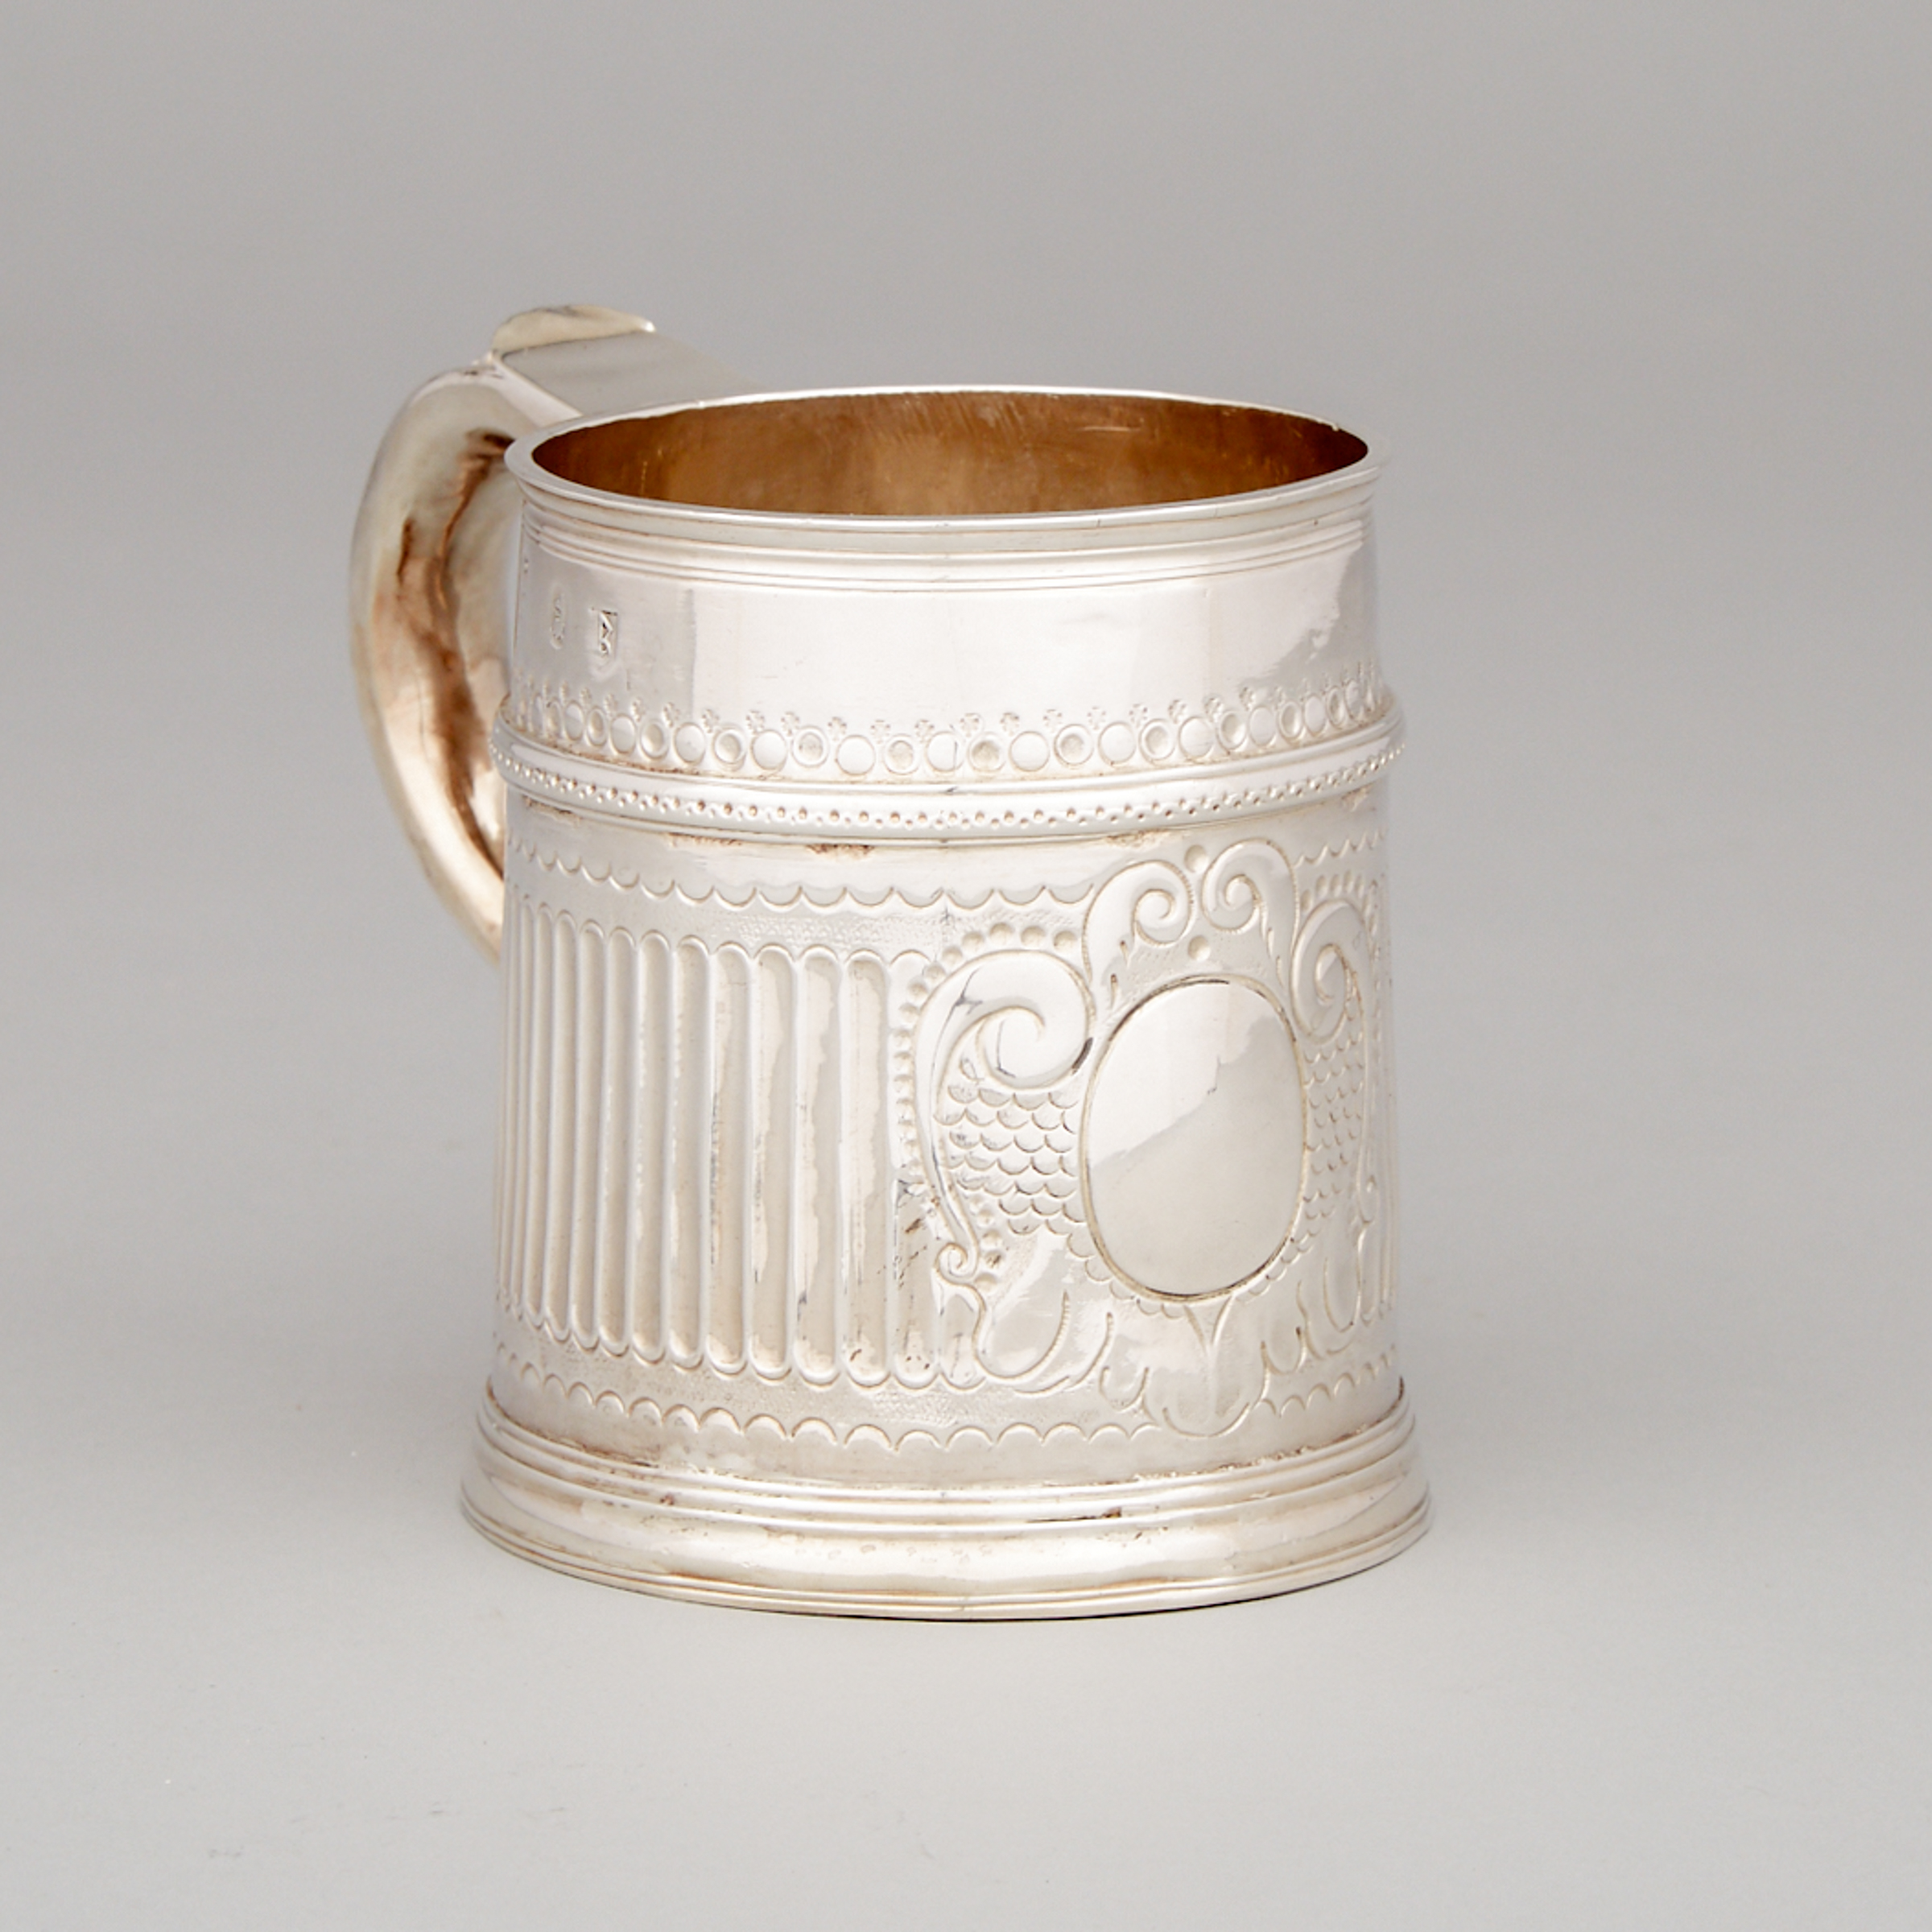 Queen Anne Silver Mug, John Gibbons, London, 1703